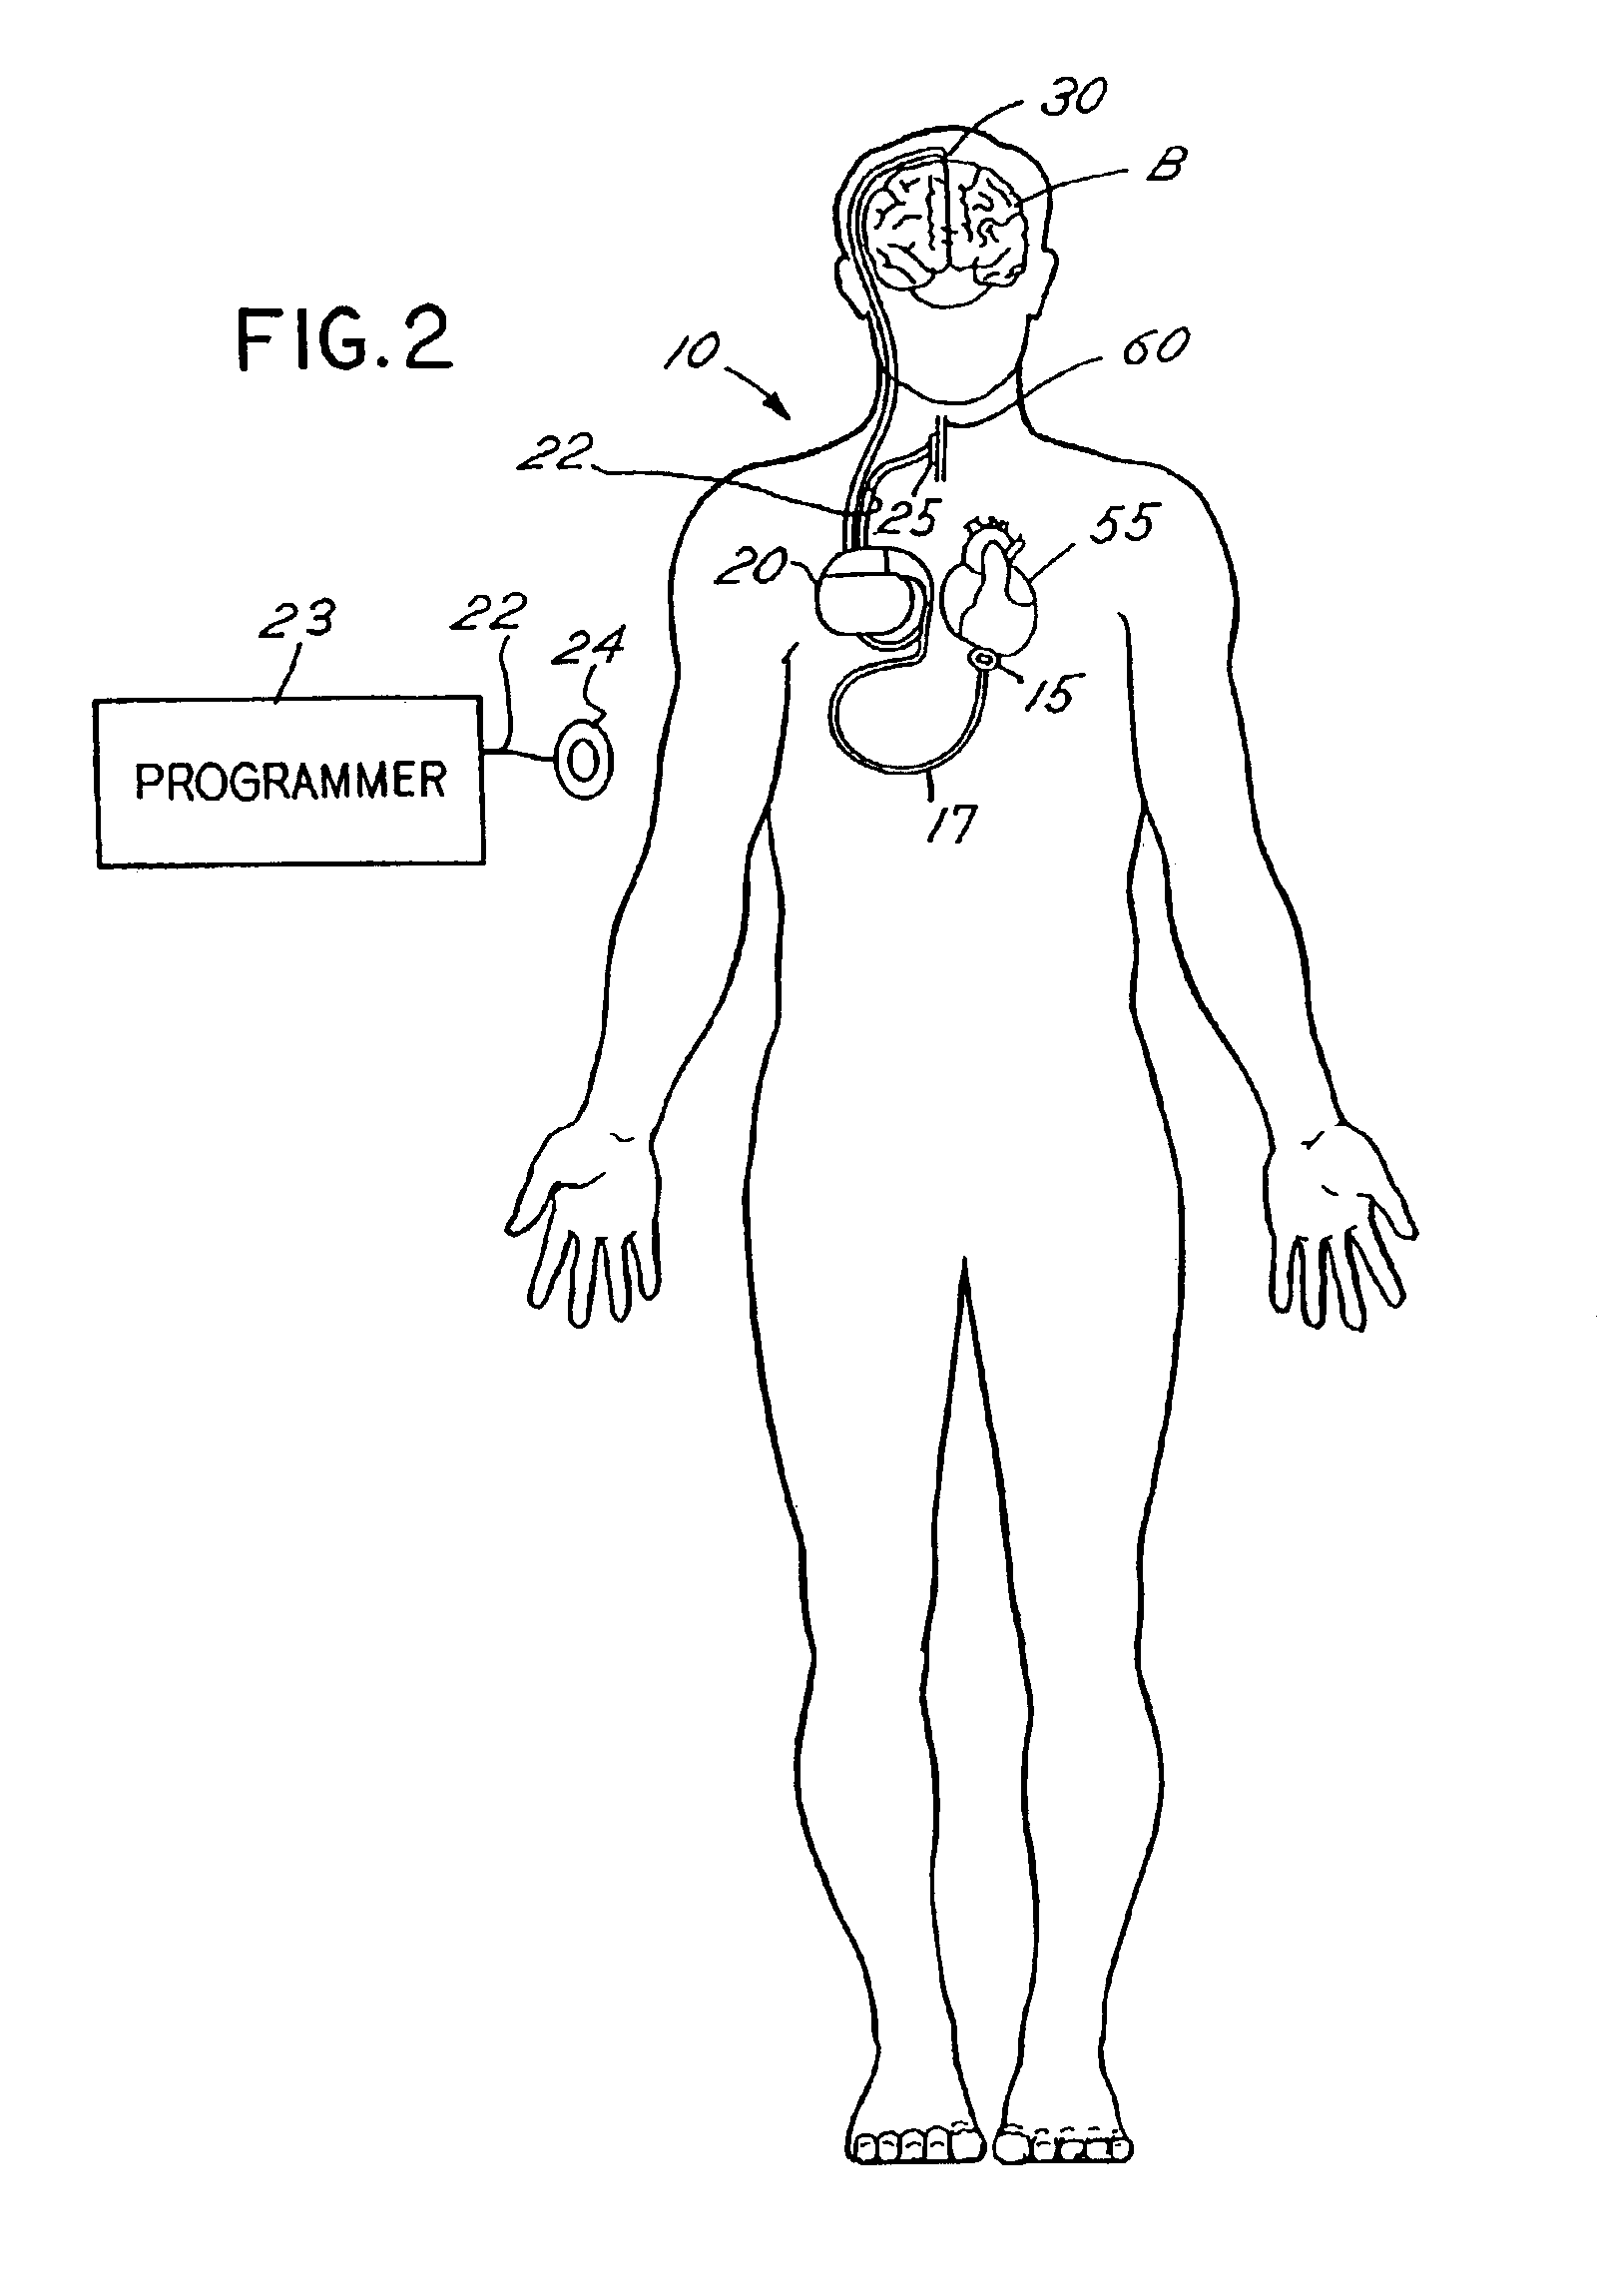 Vagal nerve stimulation techniques for treatment of epileptic seizures